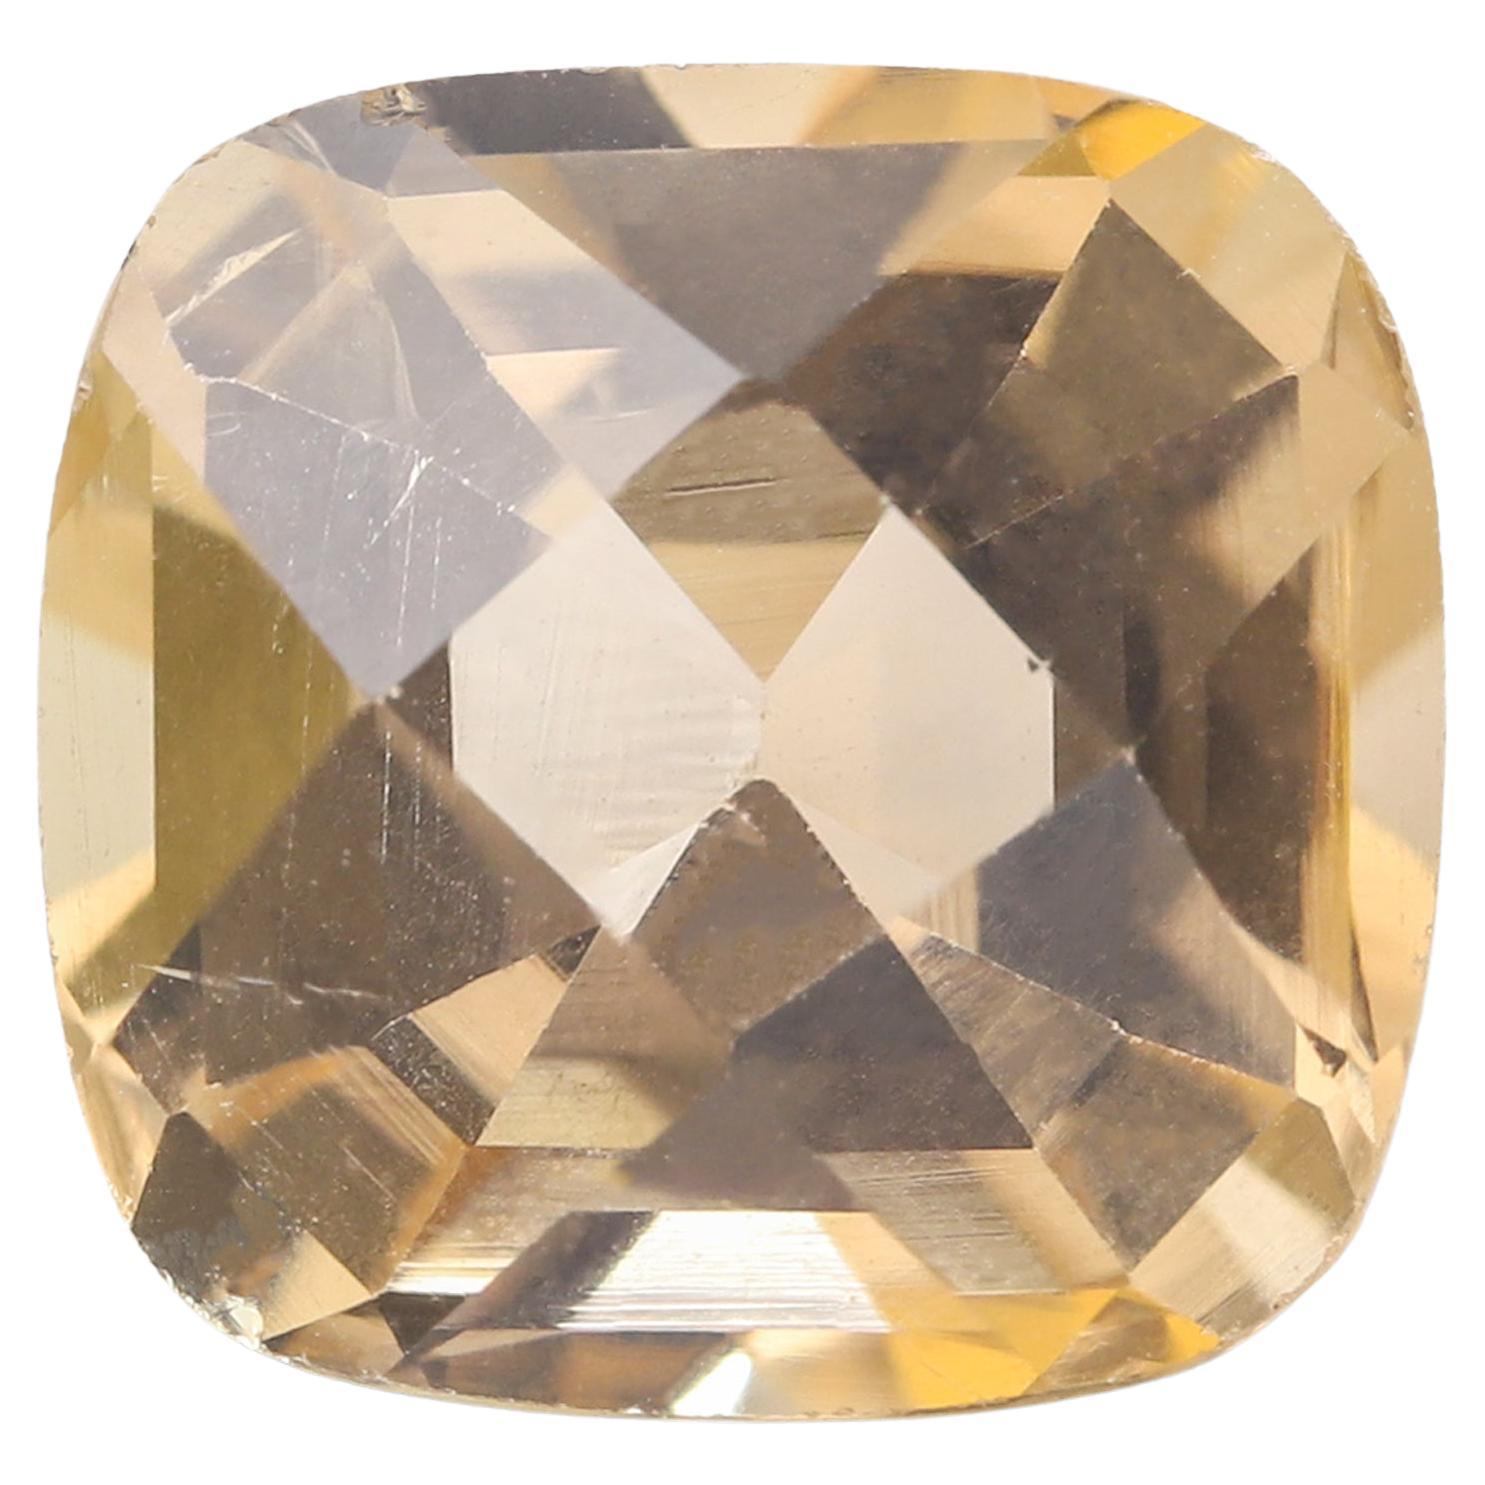 Deep Golden Natural Topaz Stone 3.44 Carats Mystic Topaz Mystic Topaz Jewelry